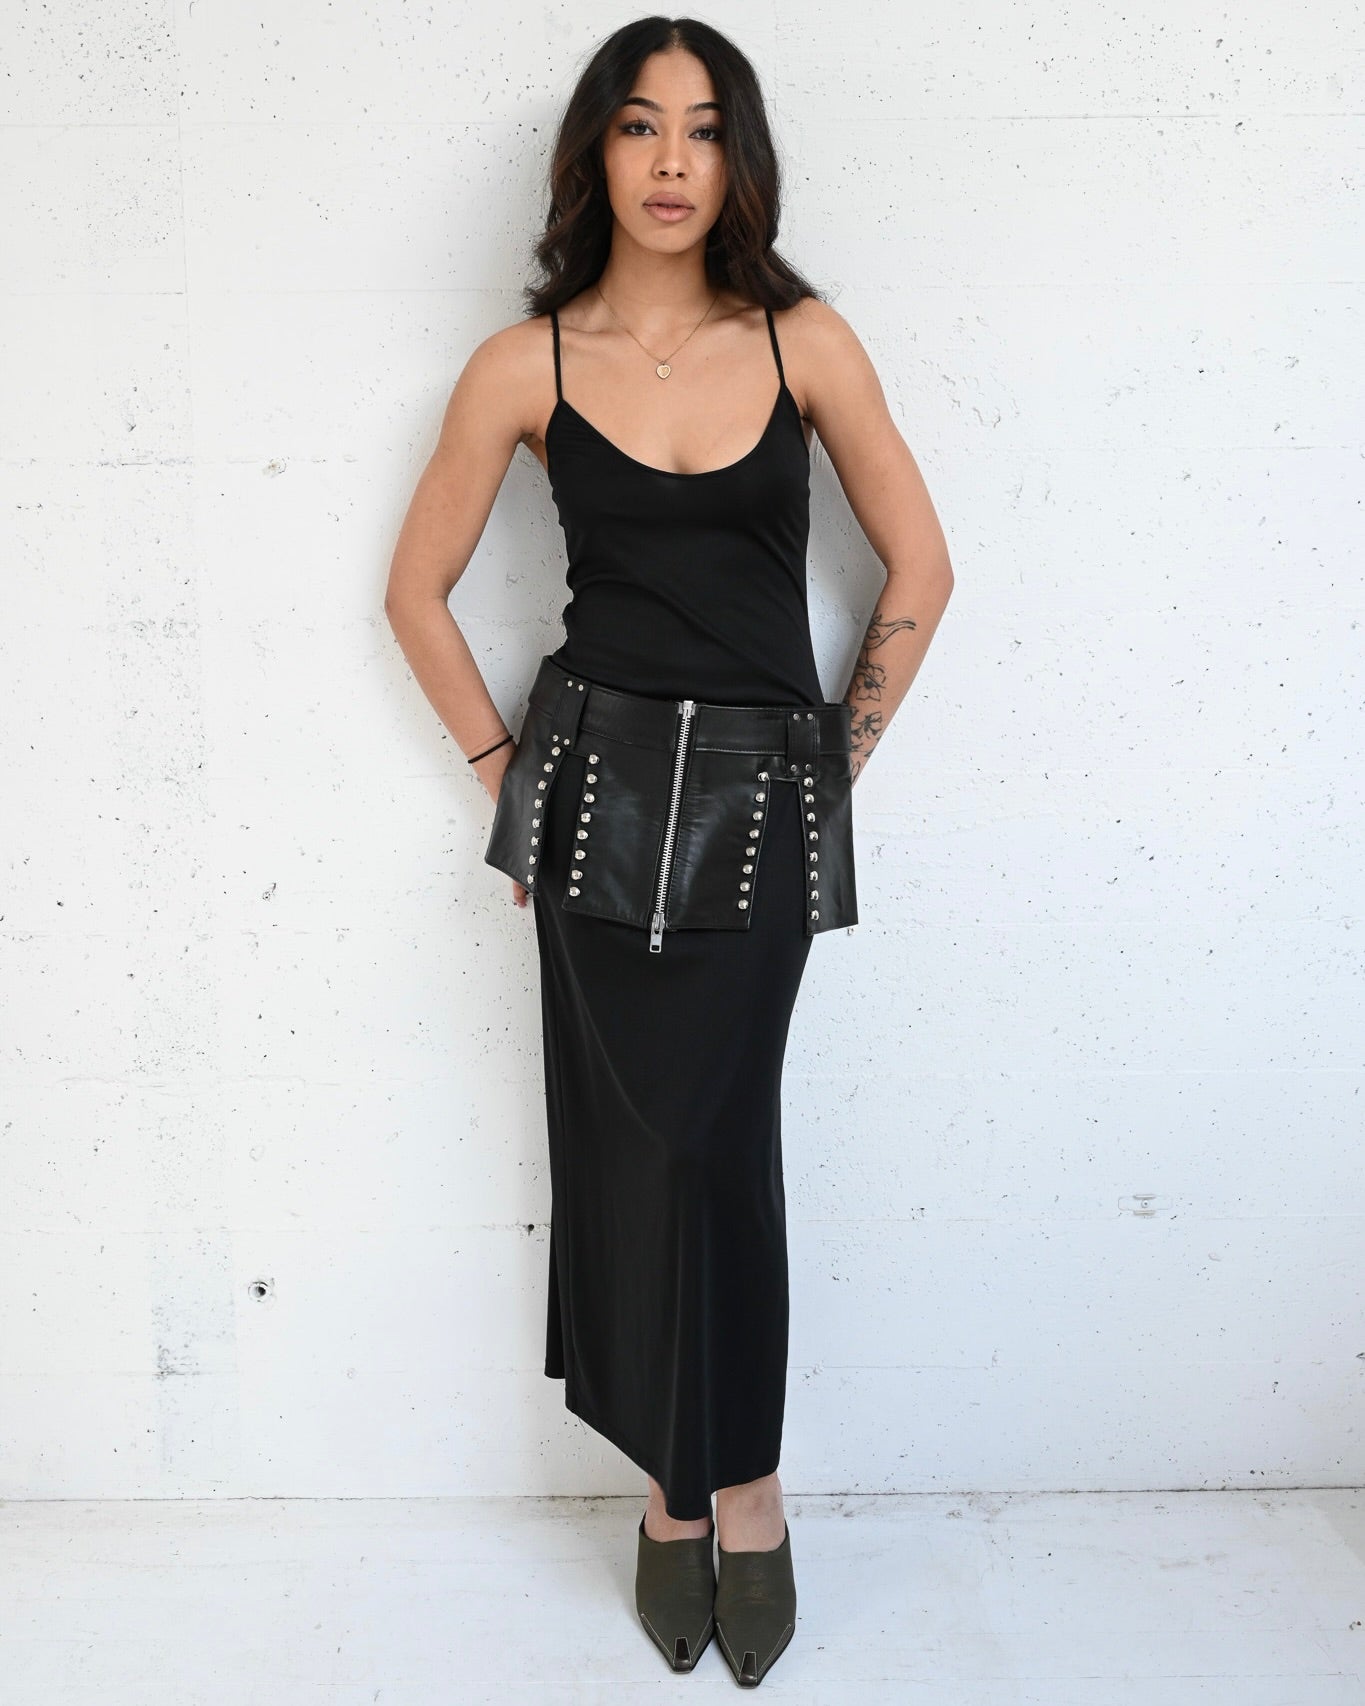 Black Leather Micro Mini Skirt (M-L)